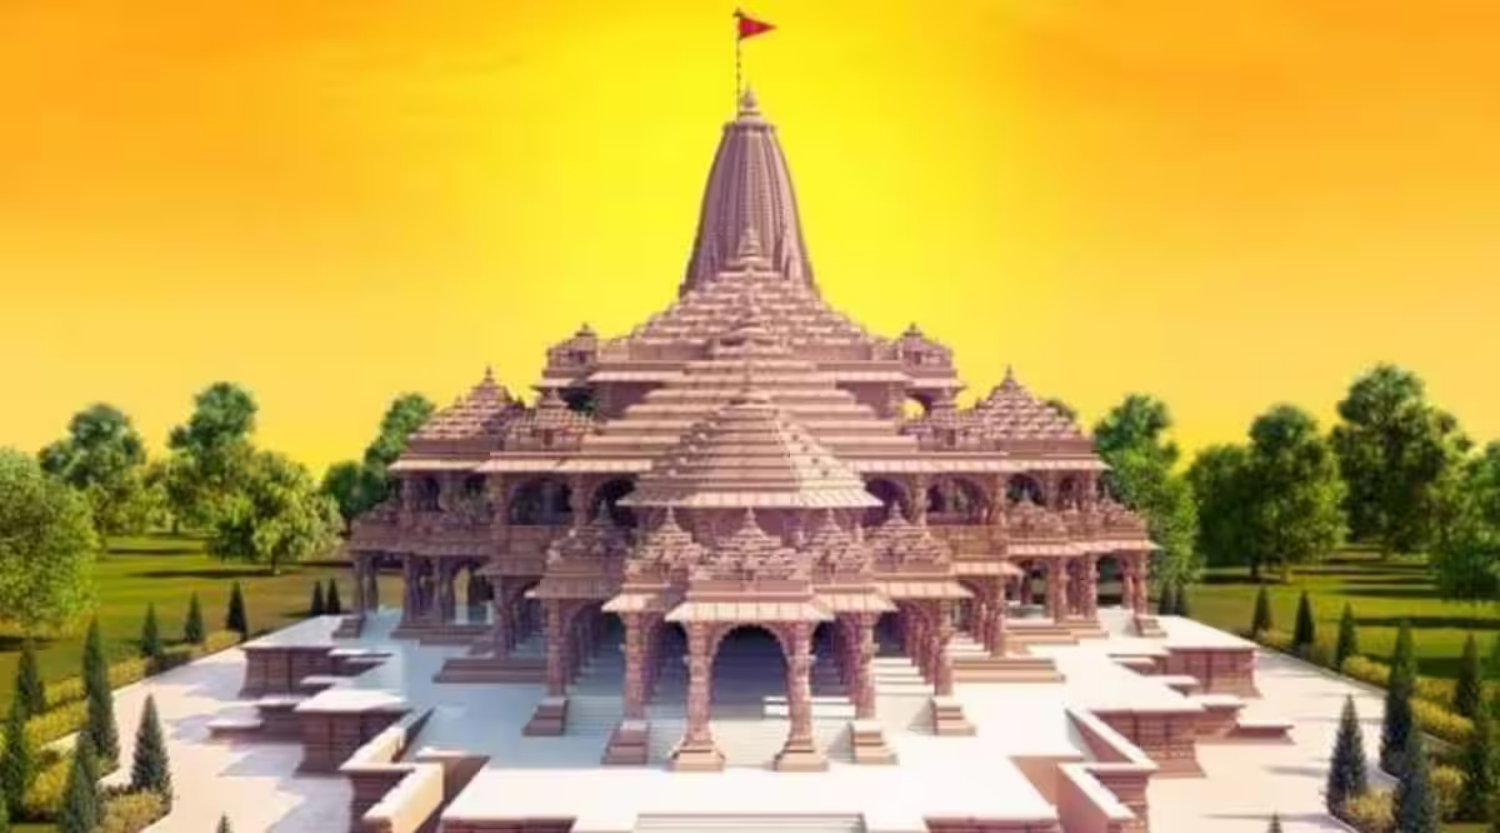 Ram Janmabhoomi Trust seeks idea for Ayodhya temple design